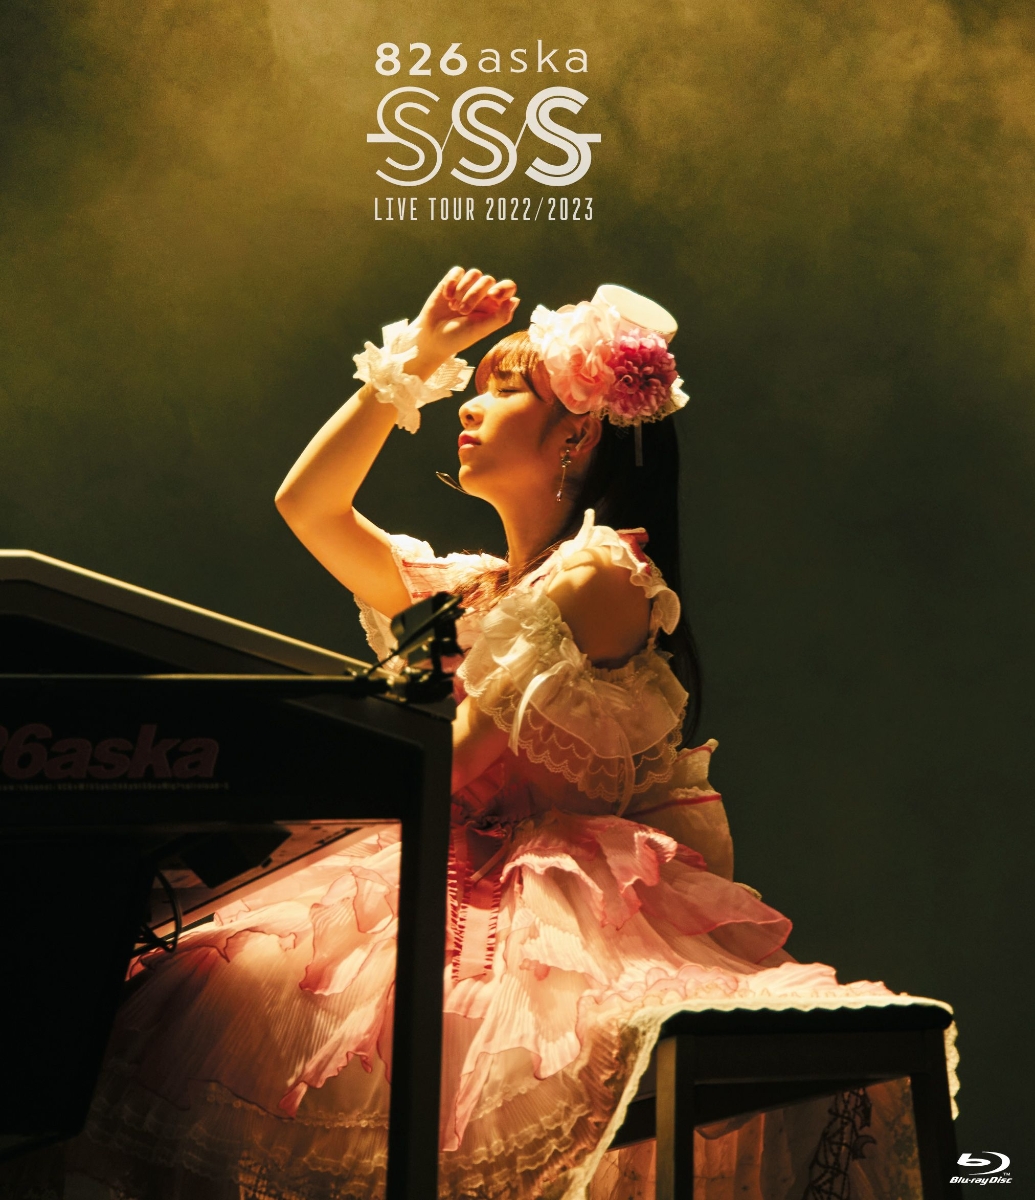 初回限定826aska LIVE TOUR 2022/2023 -SSS-【Blu-ray】